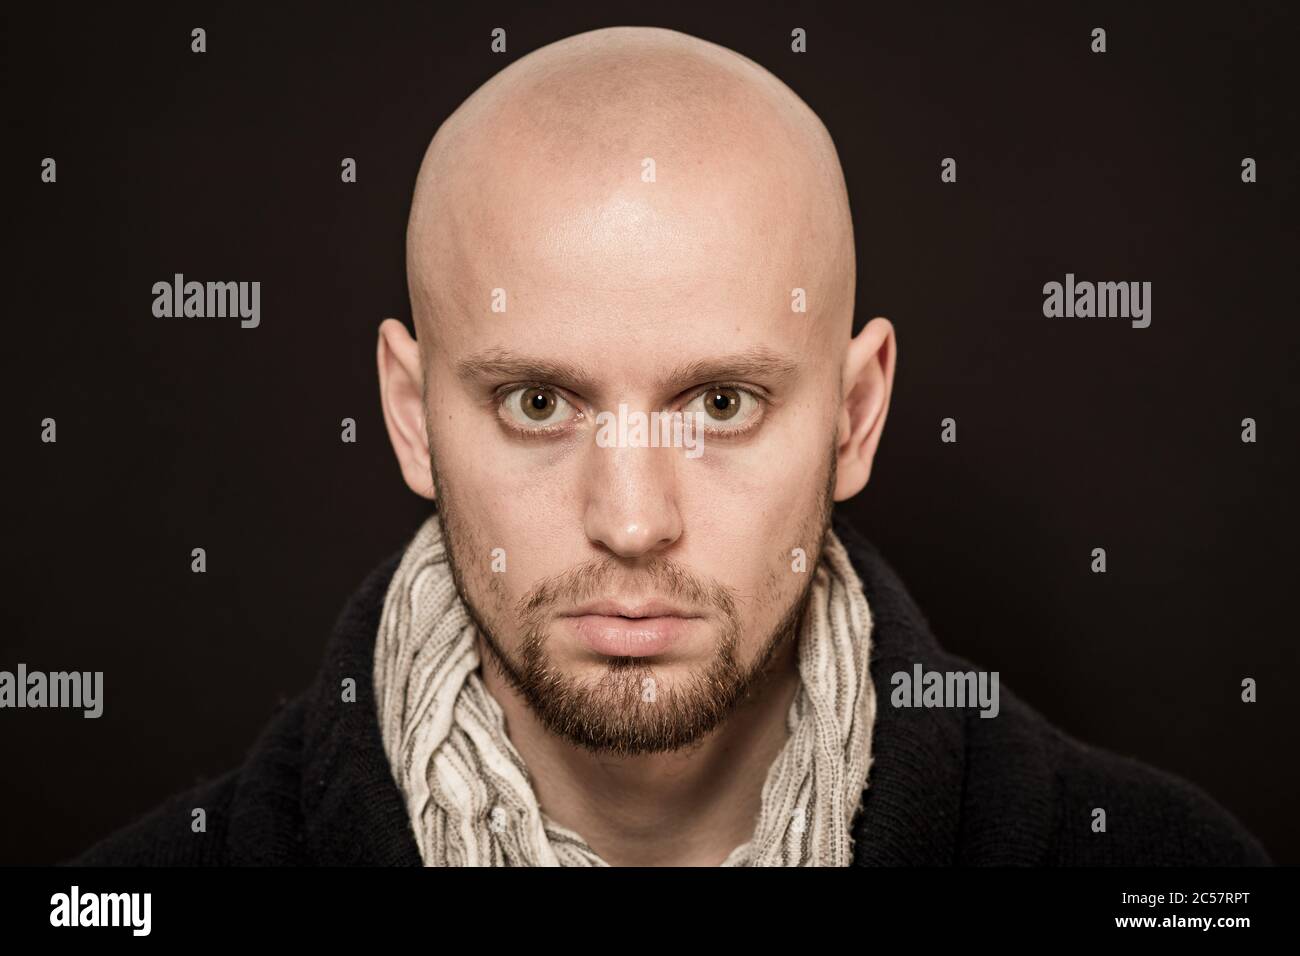 skinhead baldness shaved head man angry racist Stock Photo